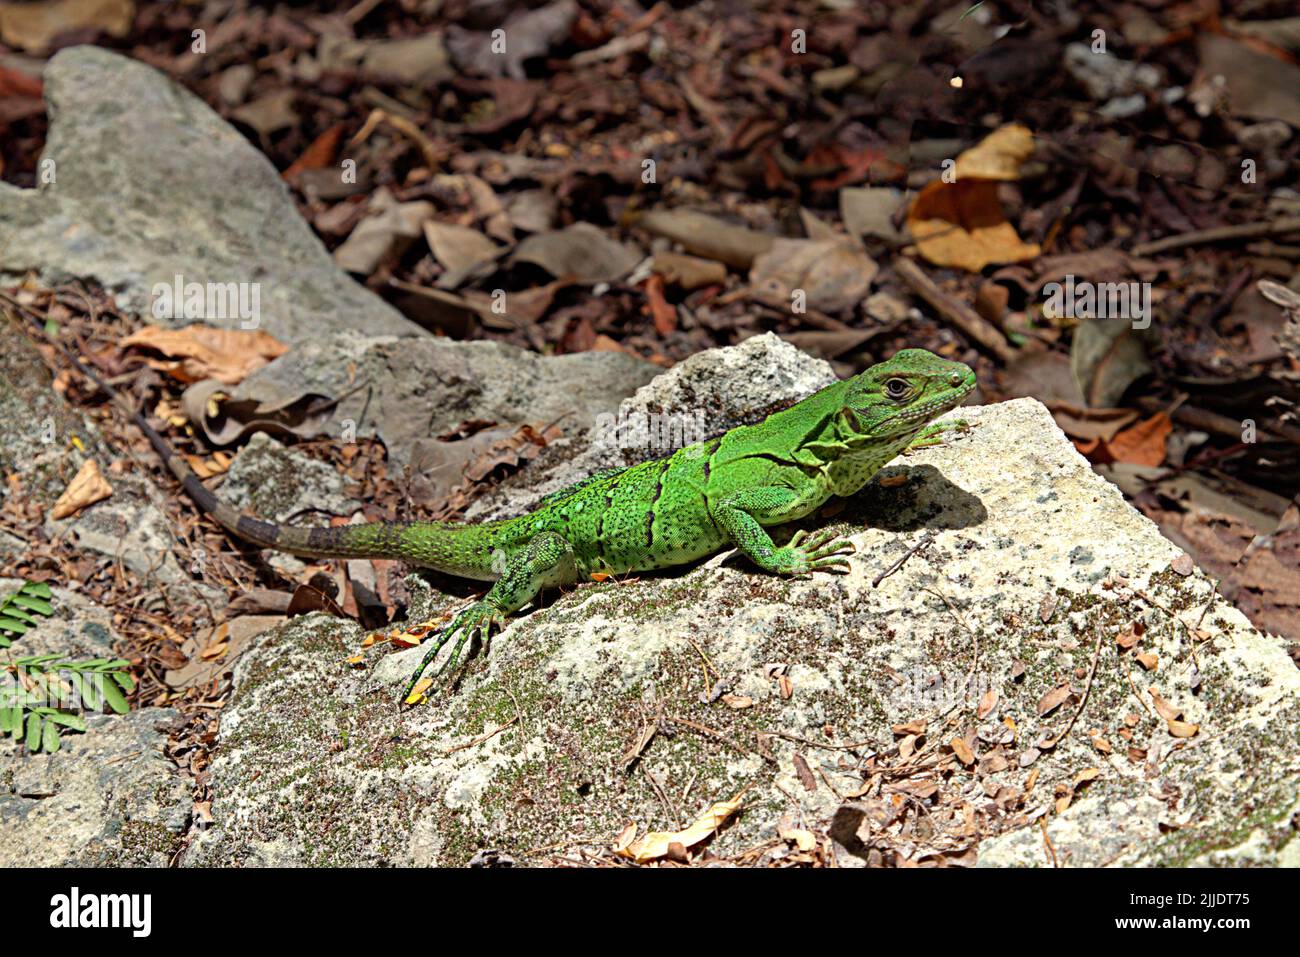 Bright green lizard on a rock Stock Photo